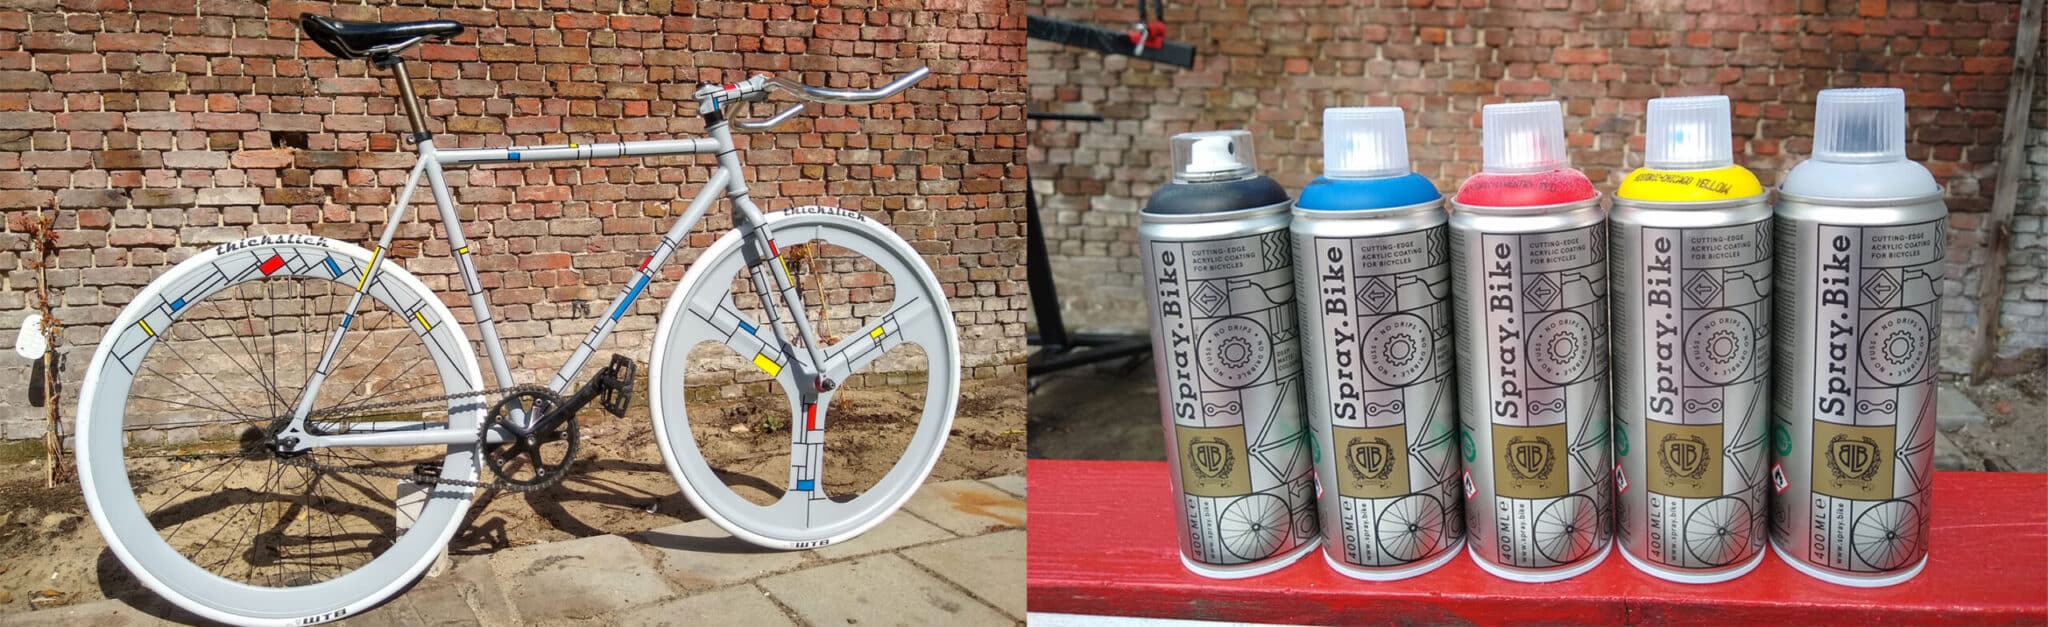 Pimp je fiets met Spray.Bike